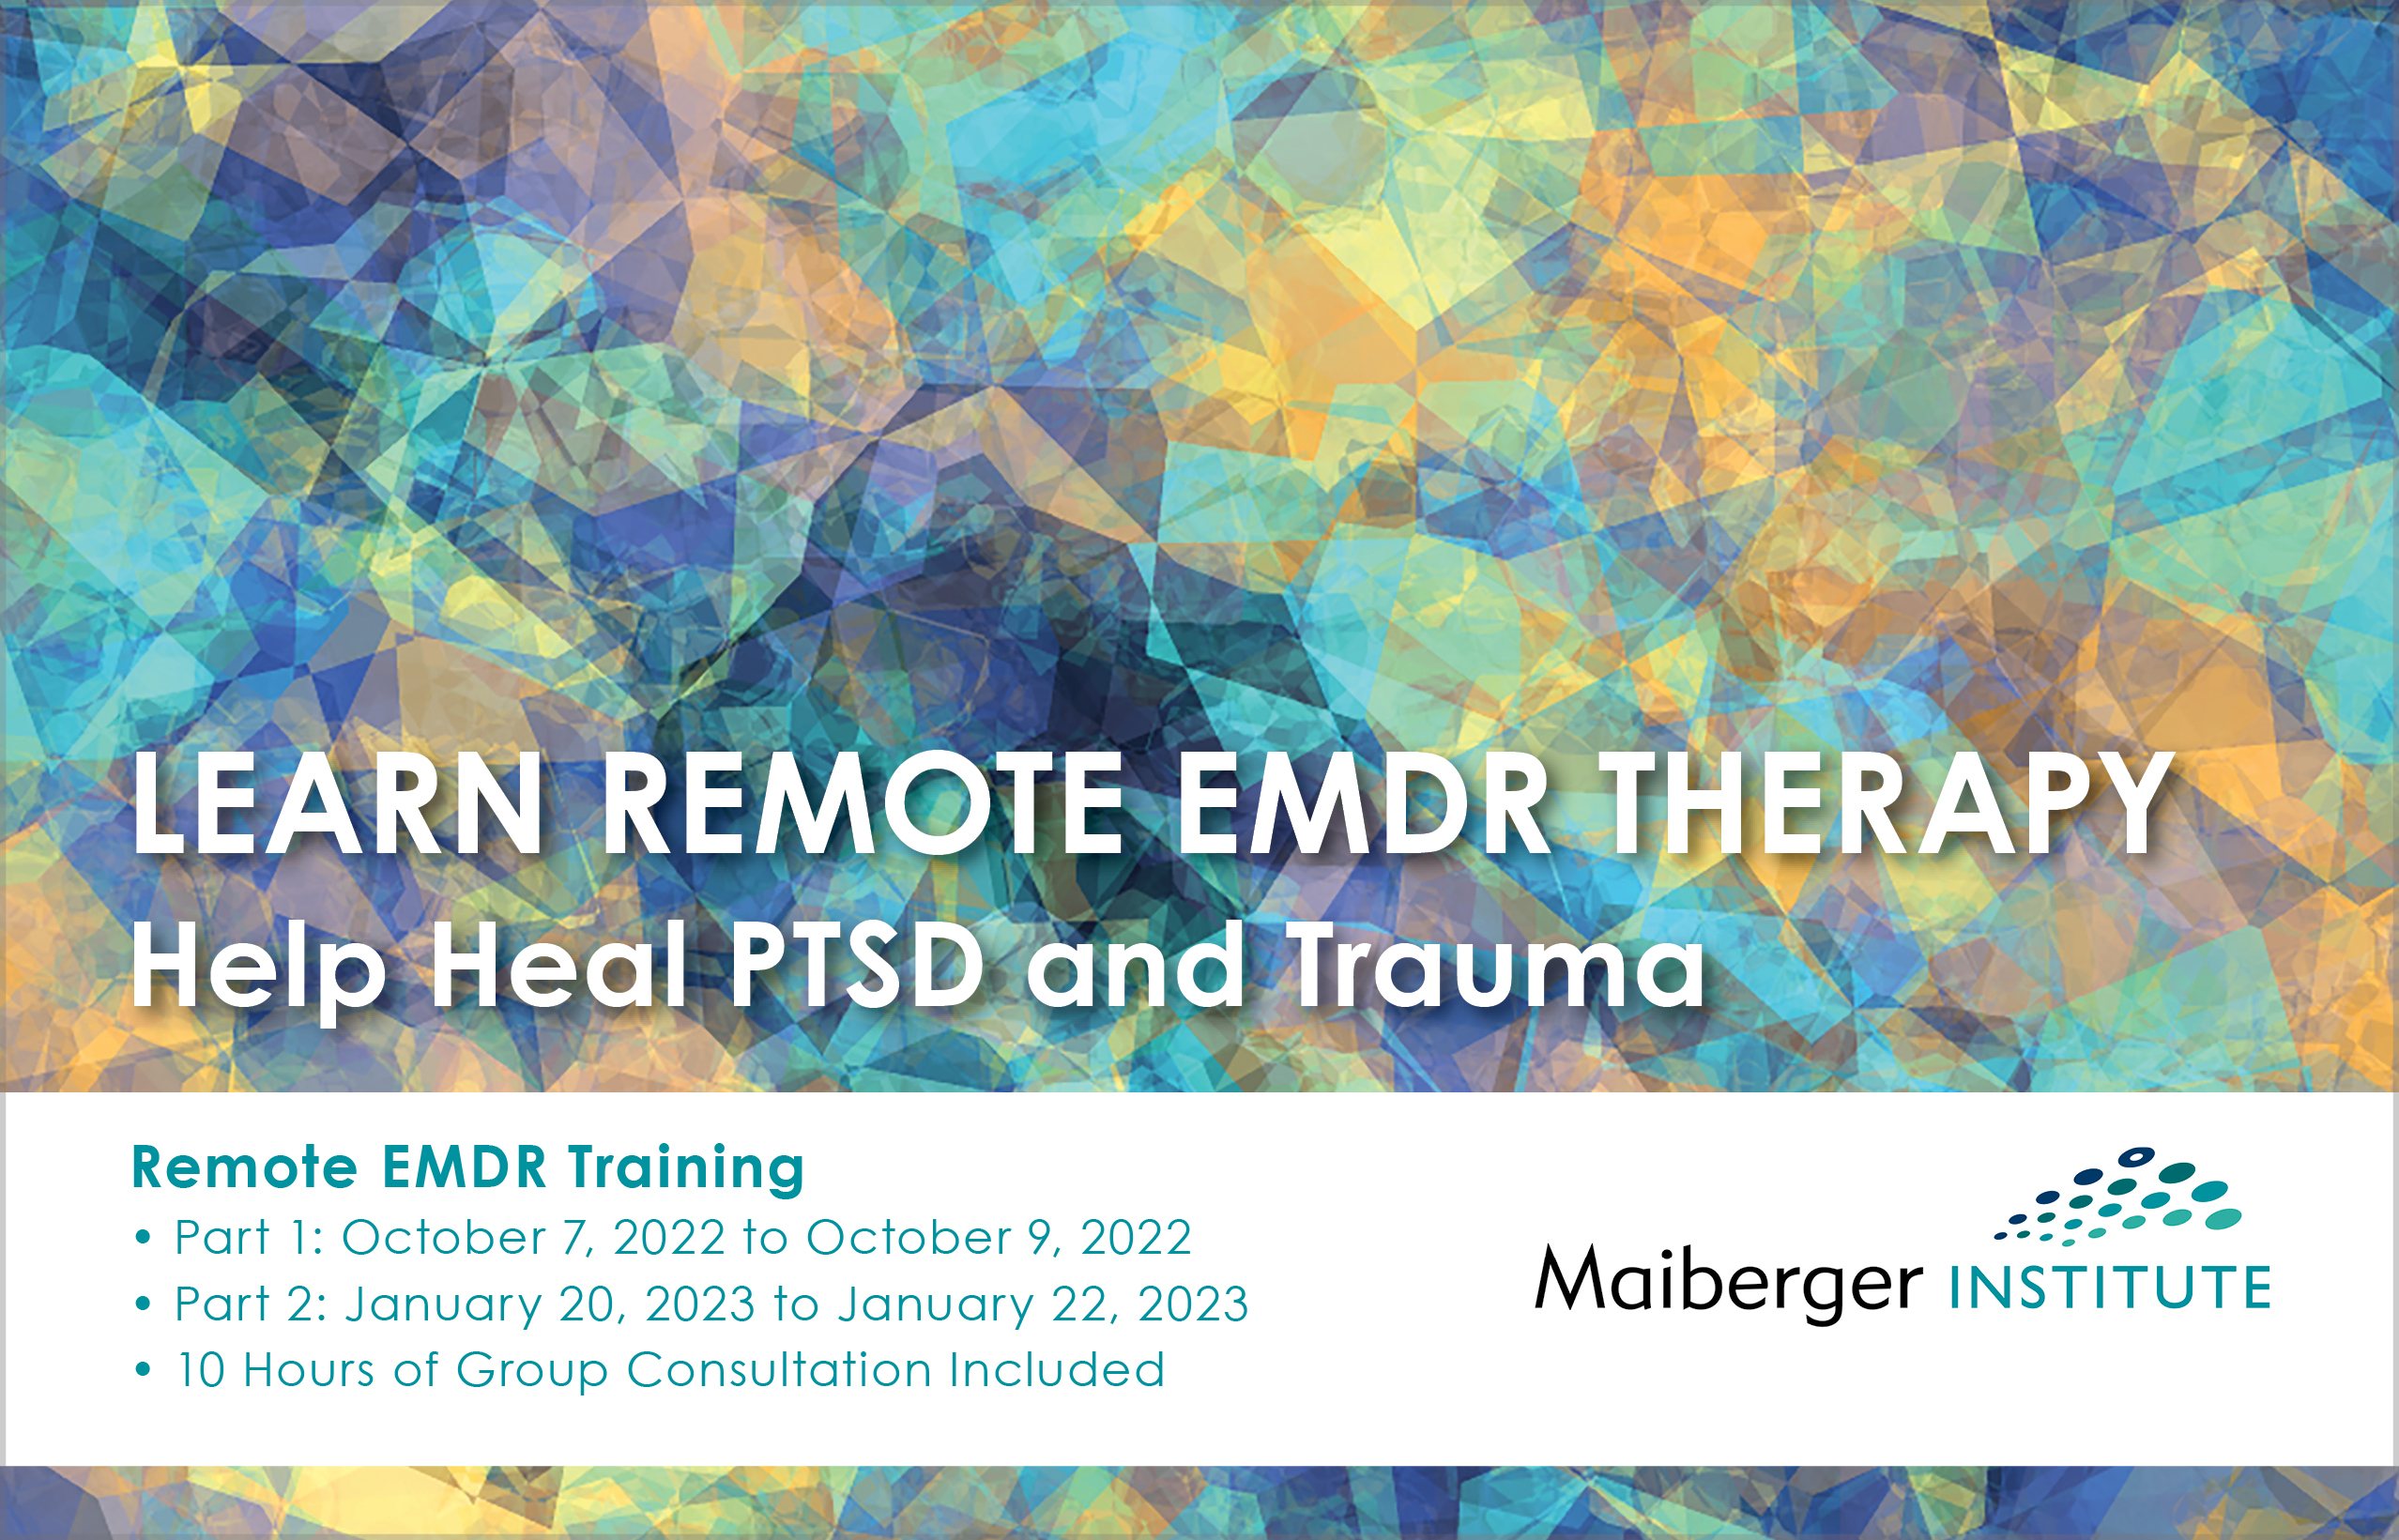 Remote EMDR Training - October 2022 and January 2023 - EMDR TRAINING SCHEDULE - MAIBERGER INSTITUTE